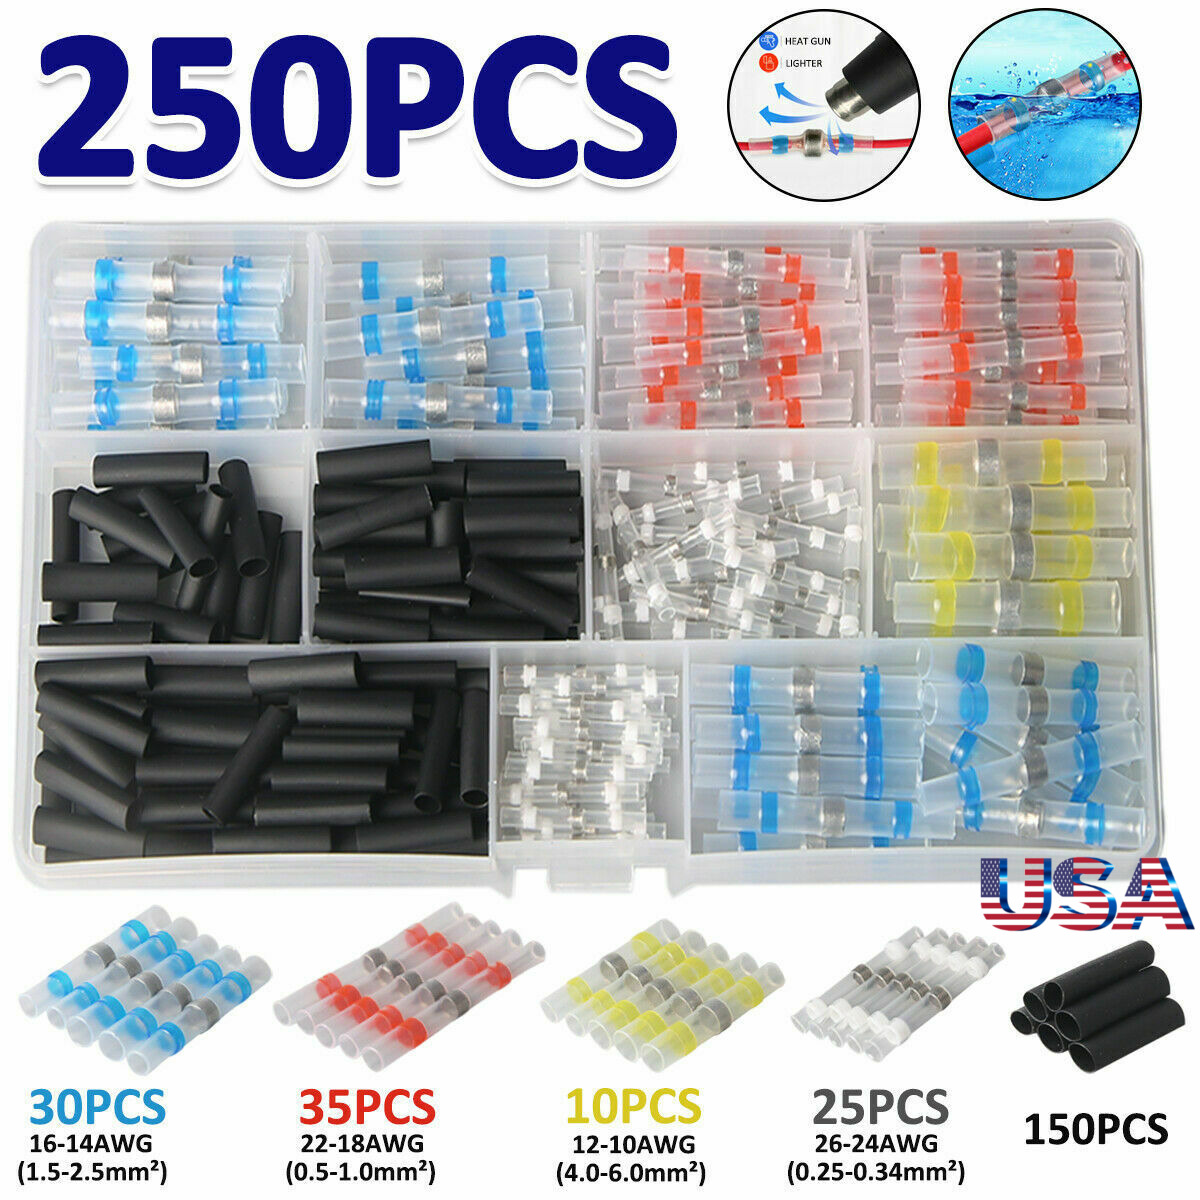 250PCS Solder Seal Sleeve Heat Shrink Wire Connectors Butt Terminals Waterproof